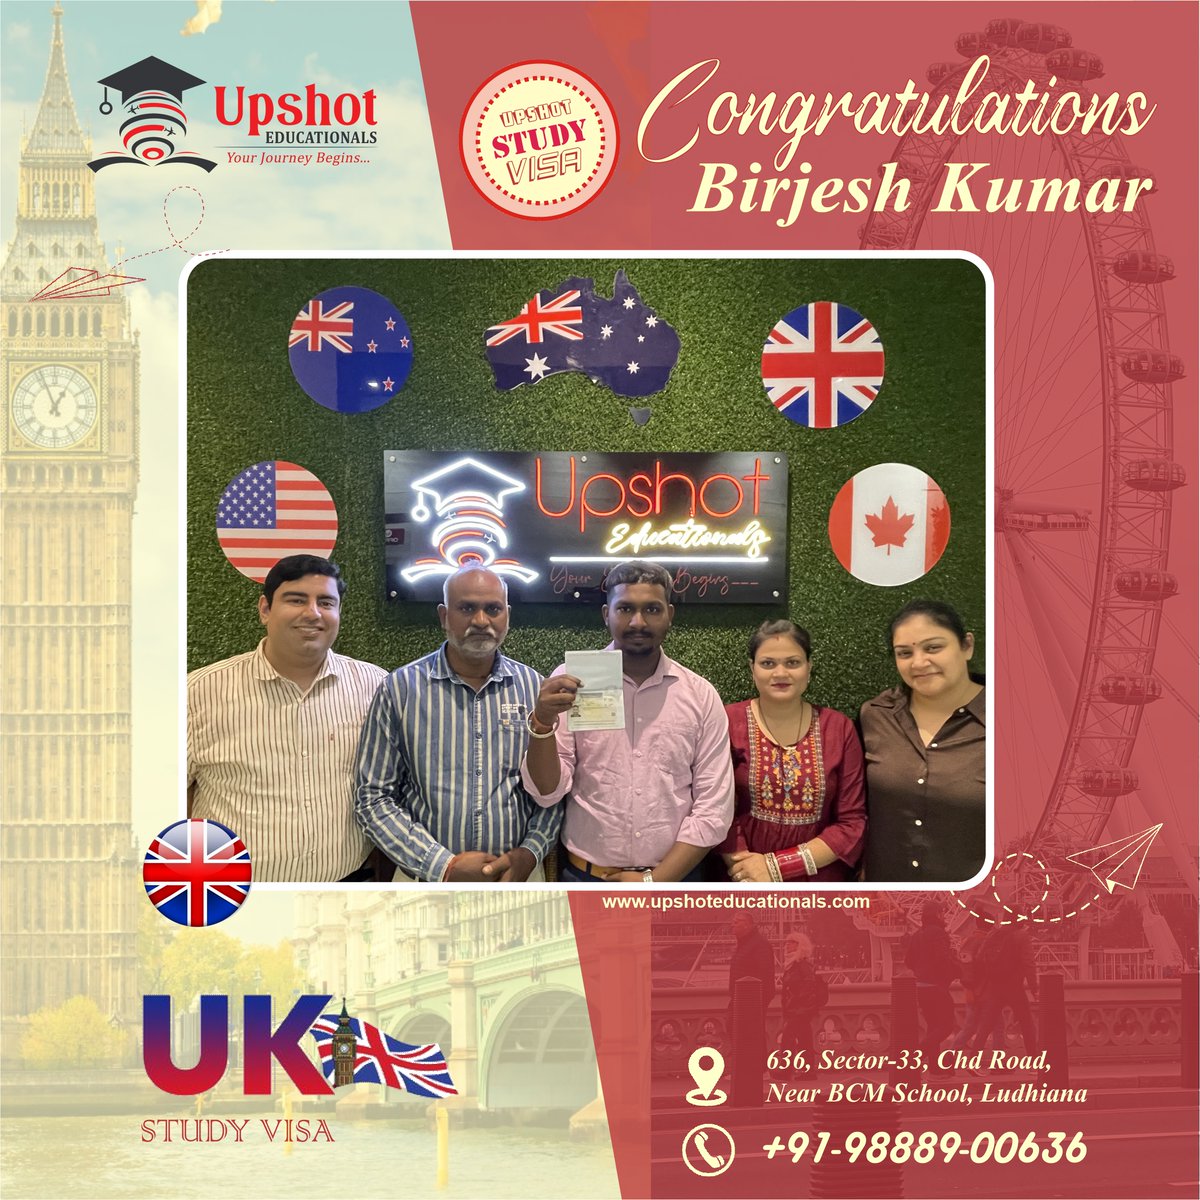 Congratulations Mr Birjesh Kumar for getting UK Study Visa.

Good wishes from all of us at Upshot Educationals. Stay in good health and high spirits always.

#upshoteducationals  #studyvisa #studyvisaexpert #studyincanada #studyinaustralia #studyinuk #studyinusa  #studyabroad